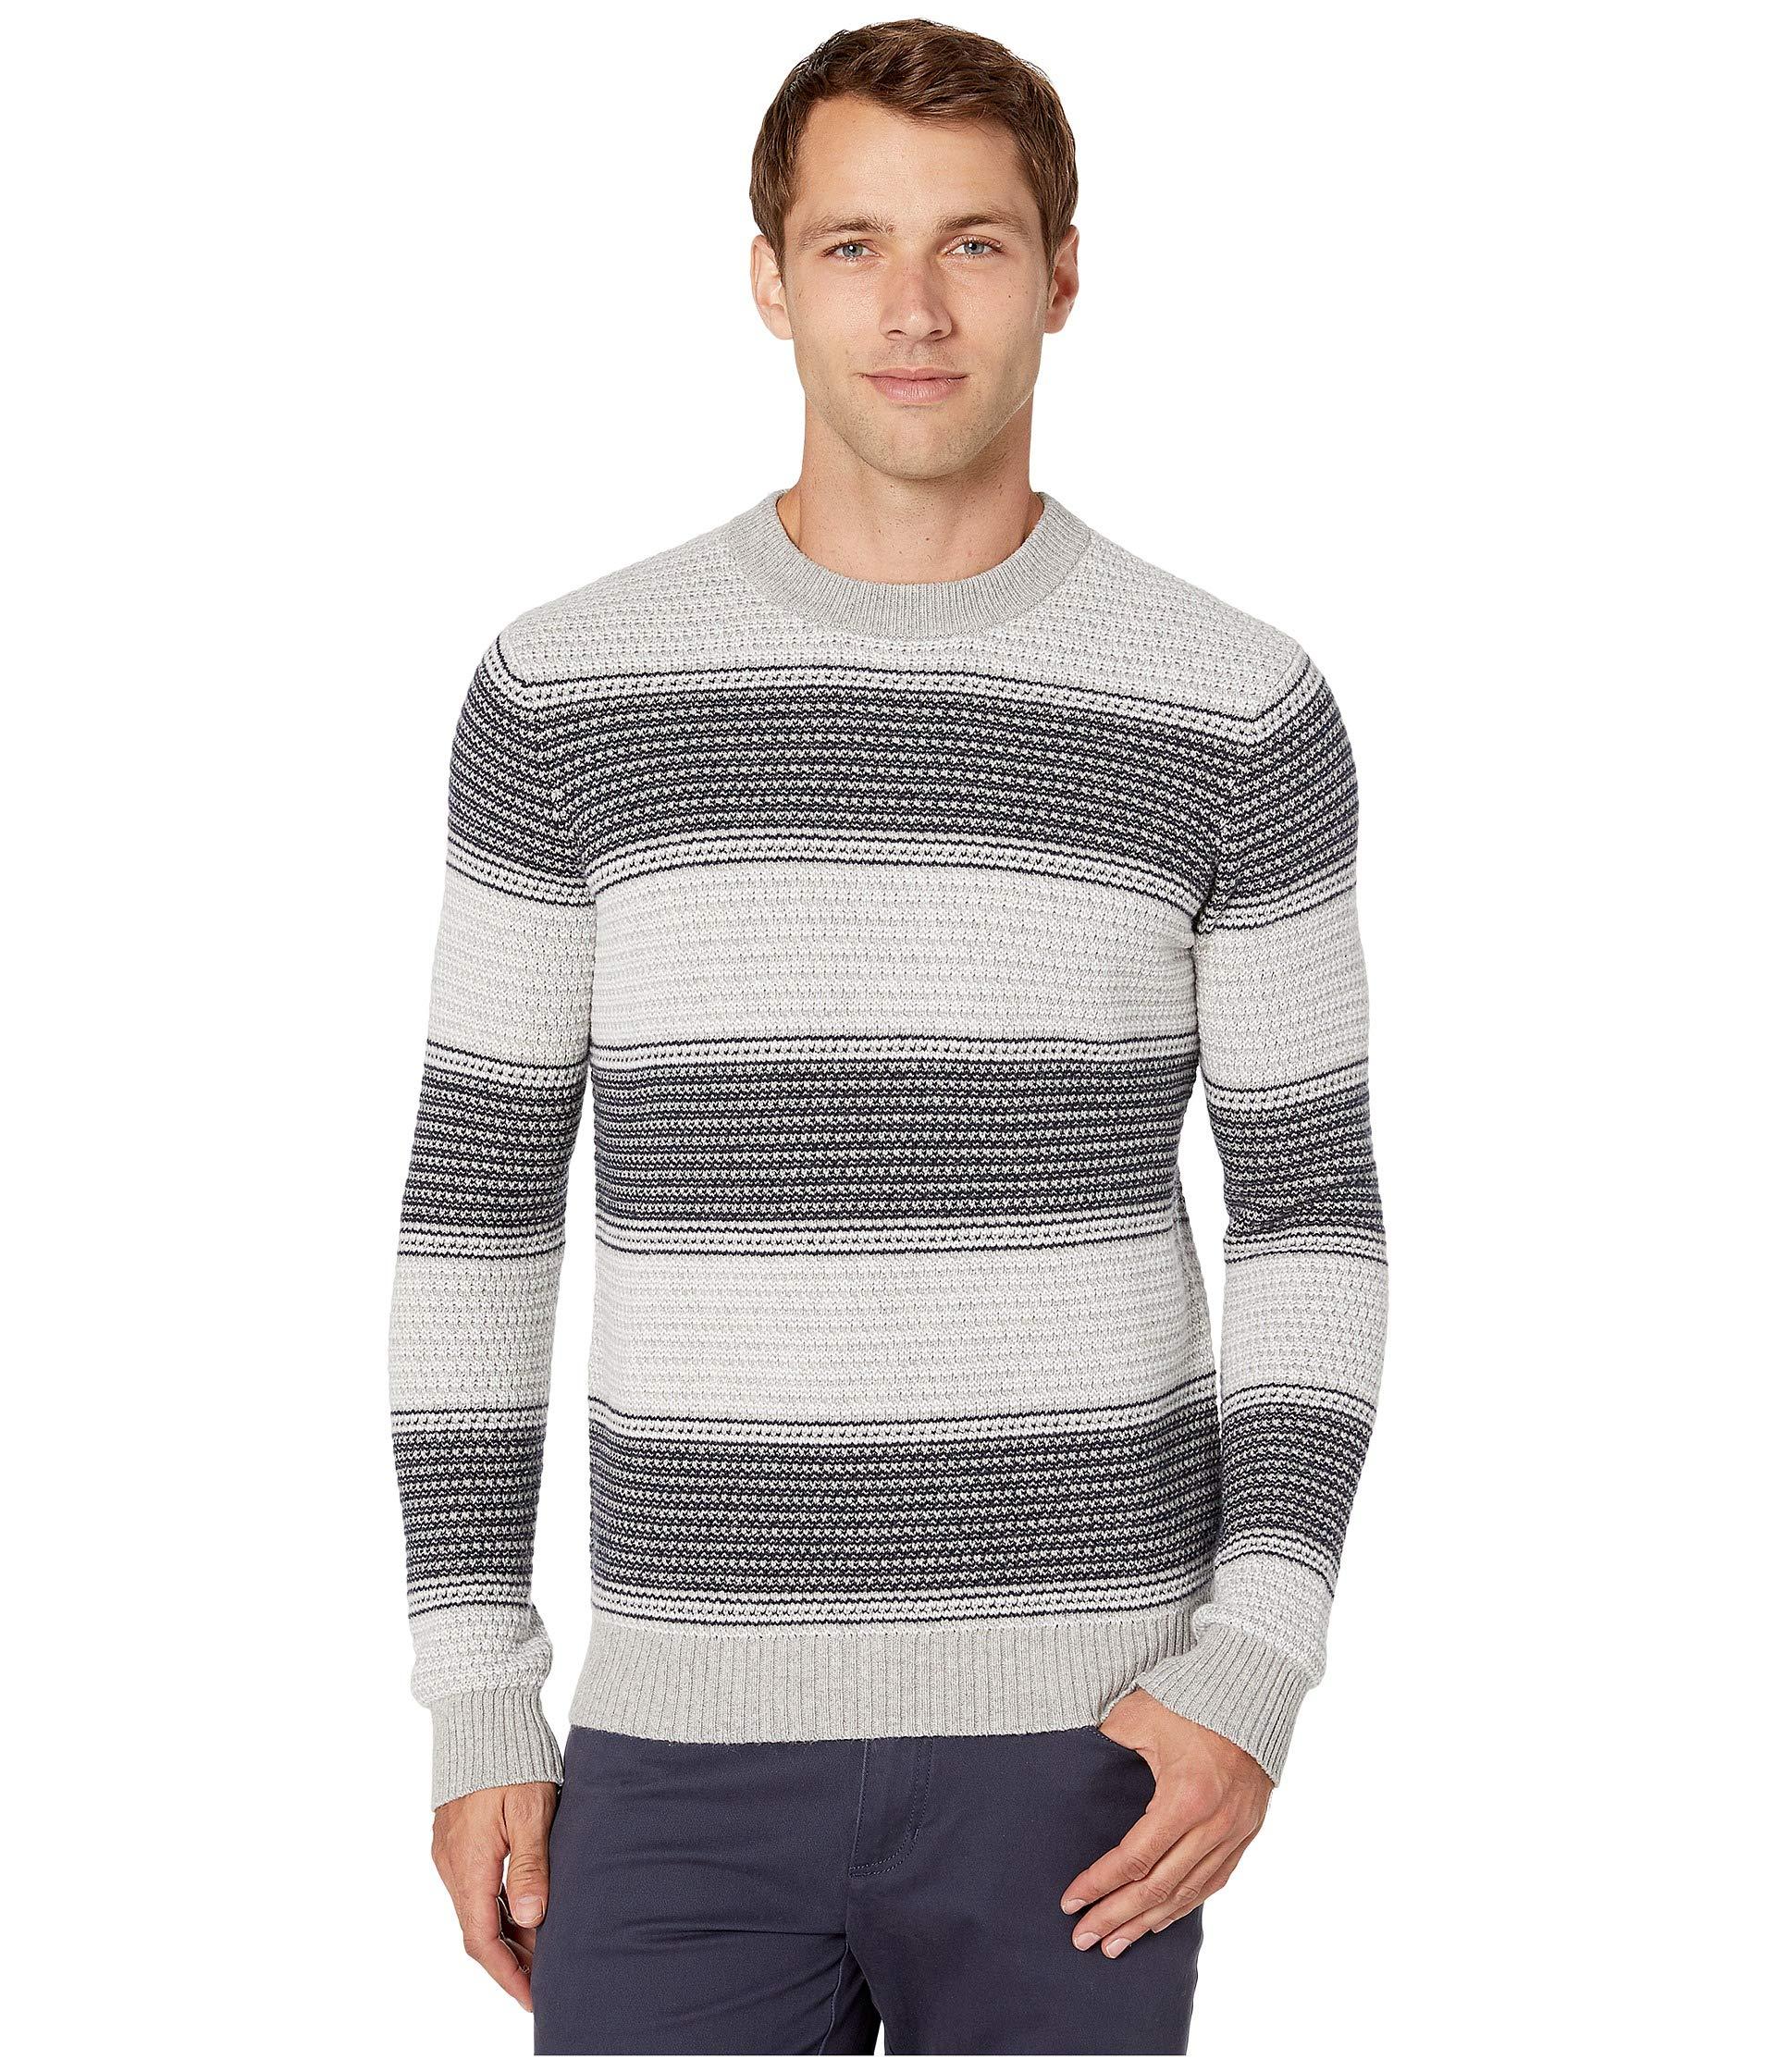 Michael Kors Wool Rack Stripe Crew Sweater in Gray for Men - Lyst